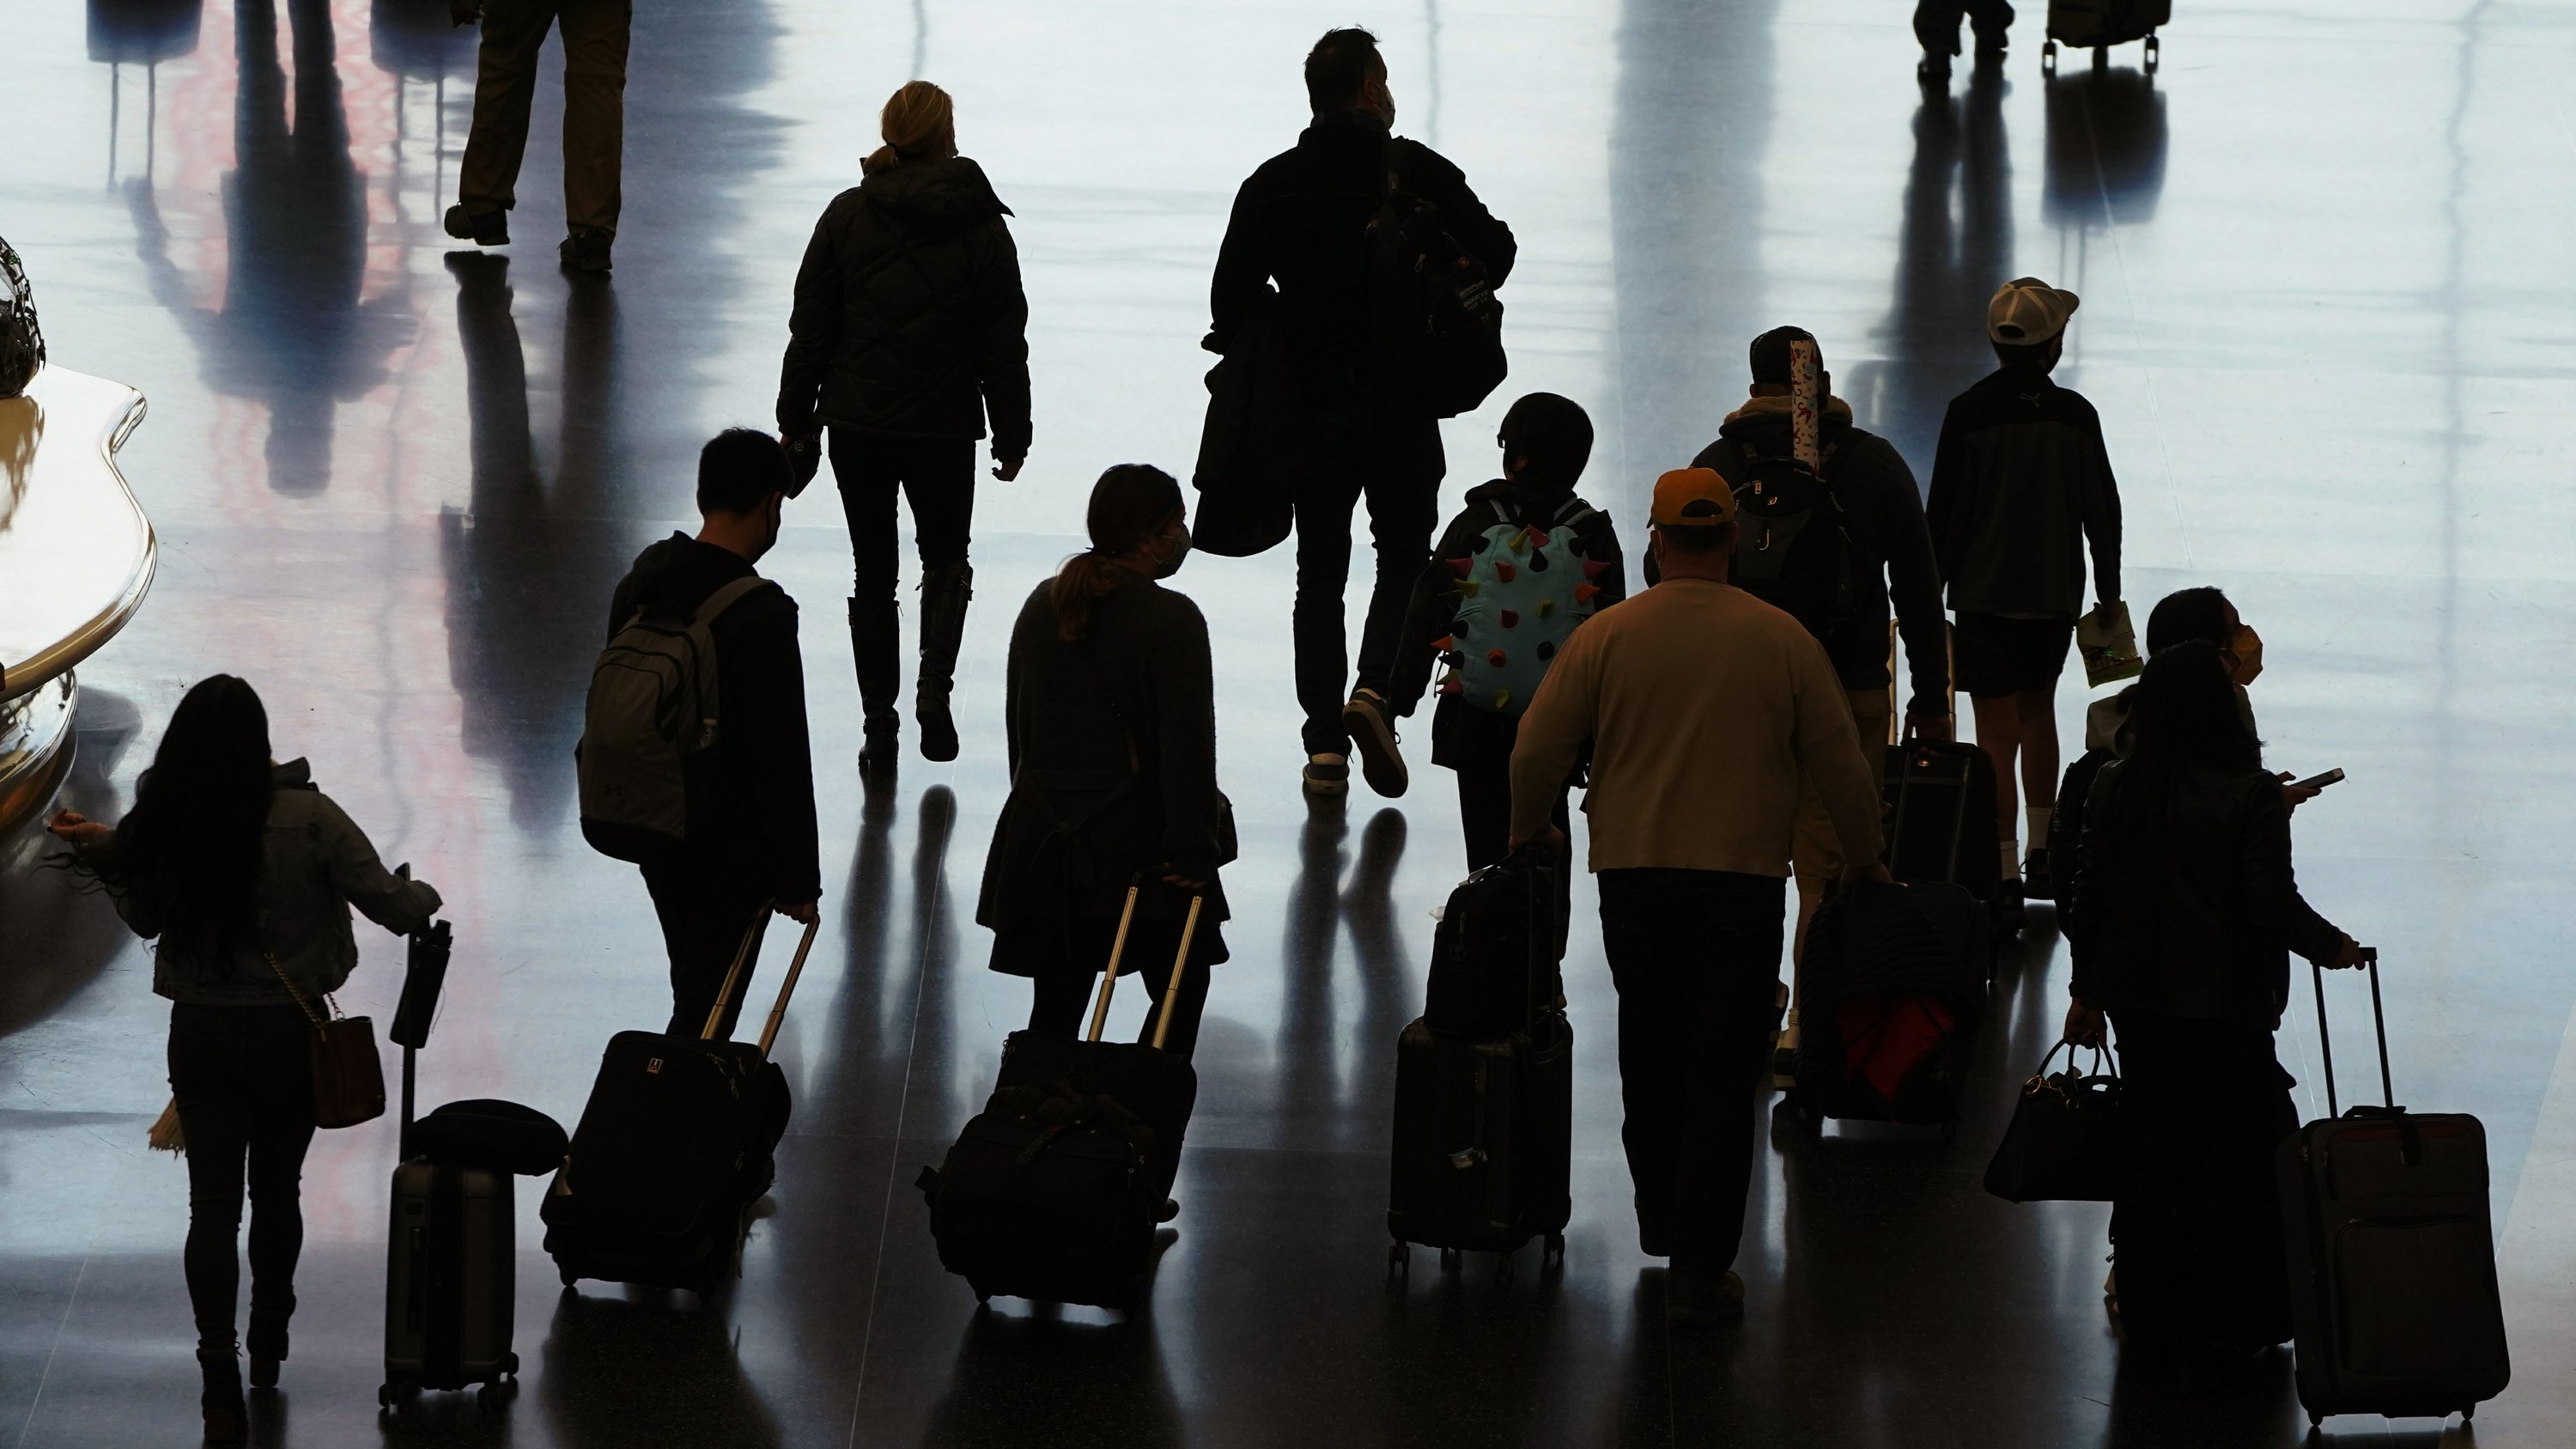 US airport traffic is rising despite holiday travel warnings